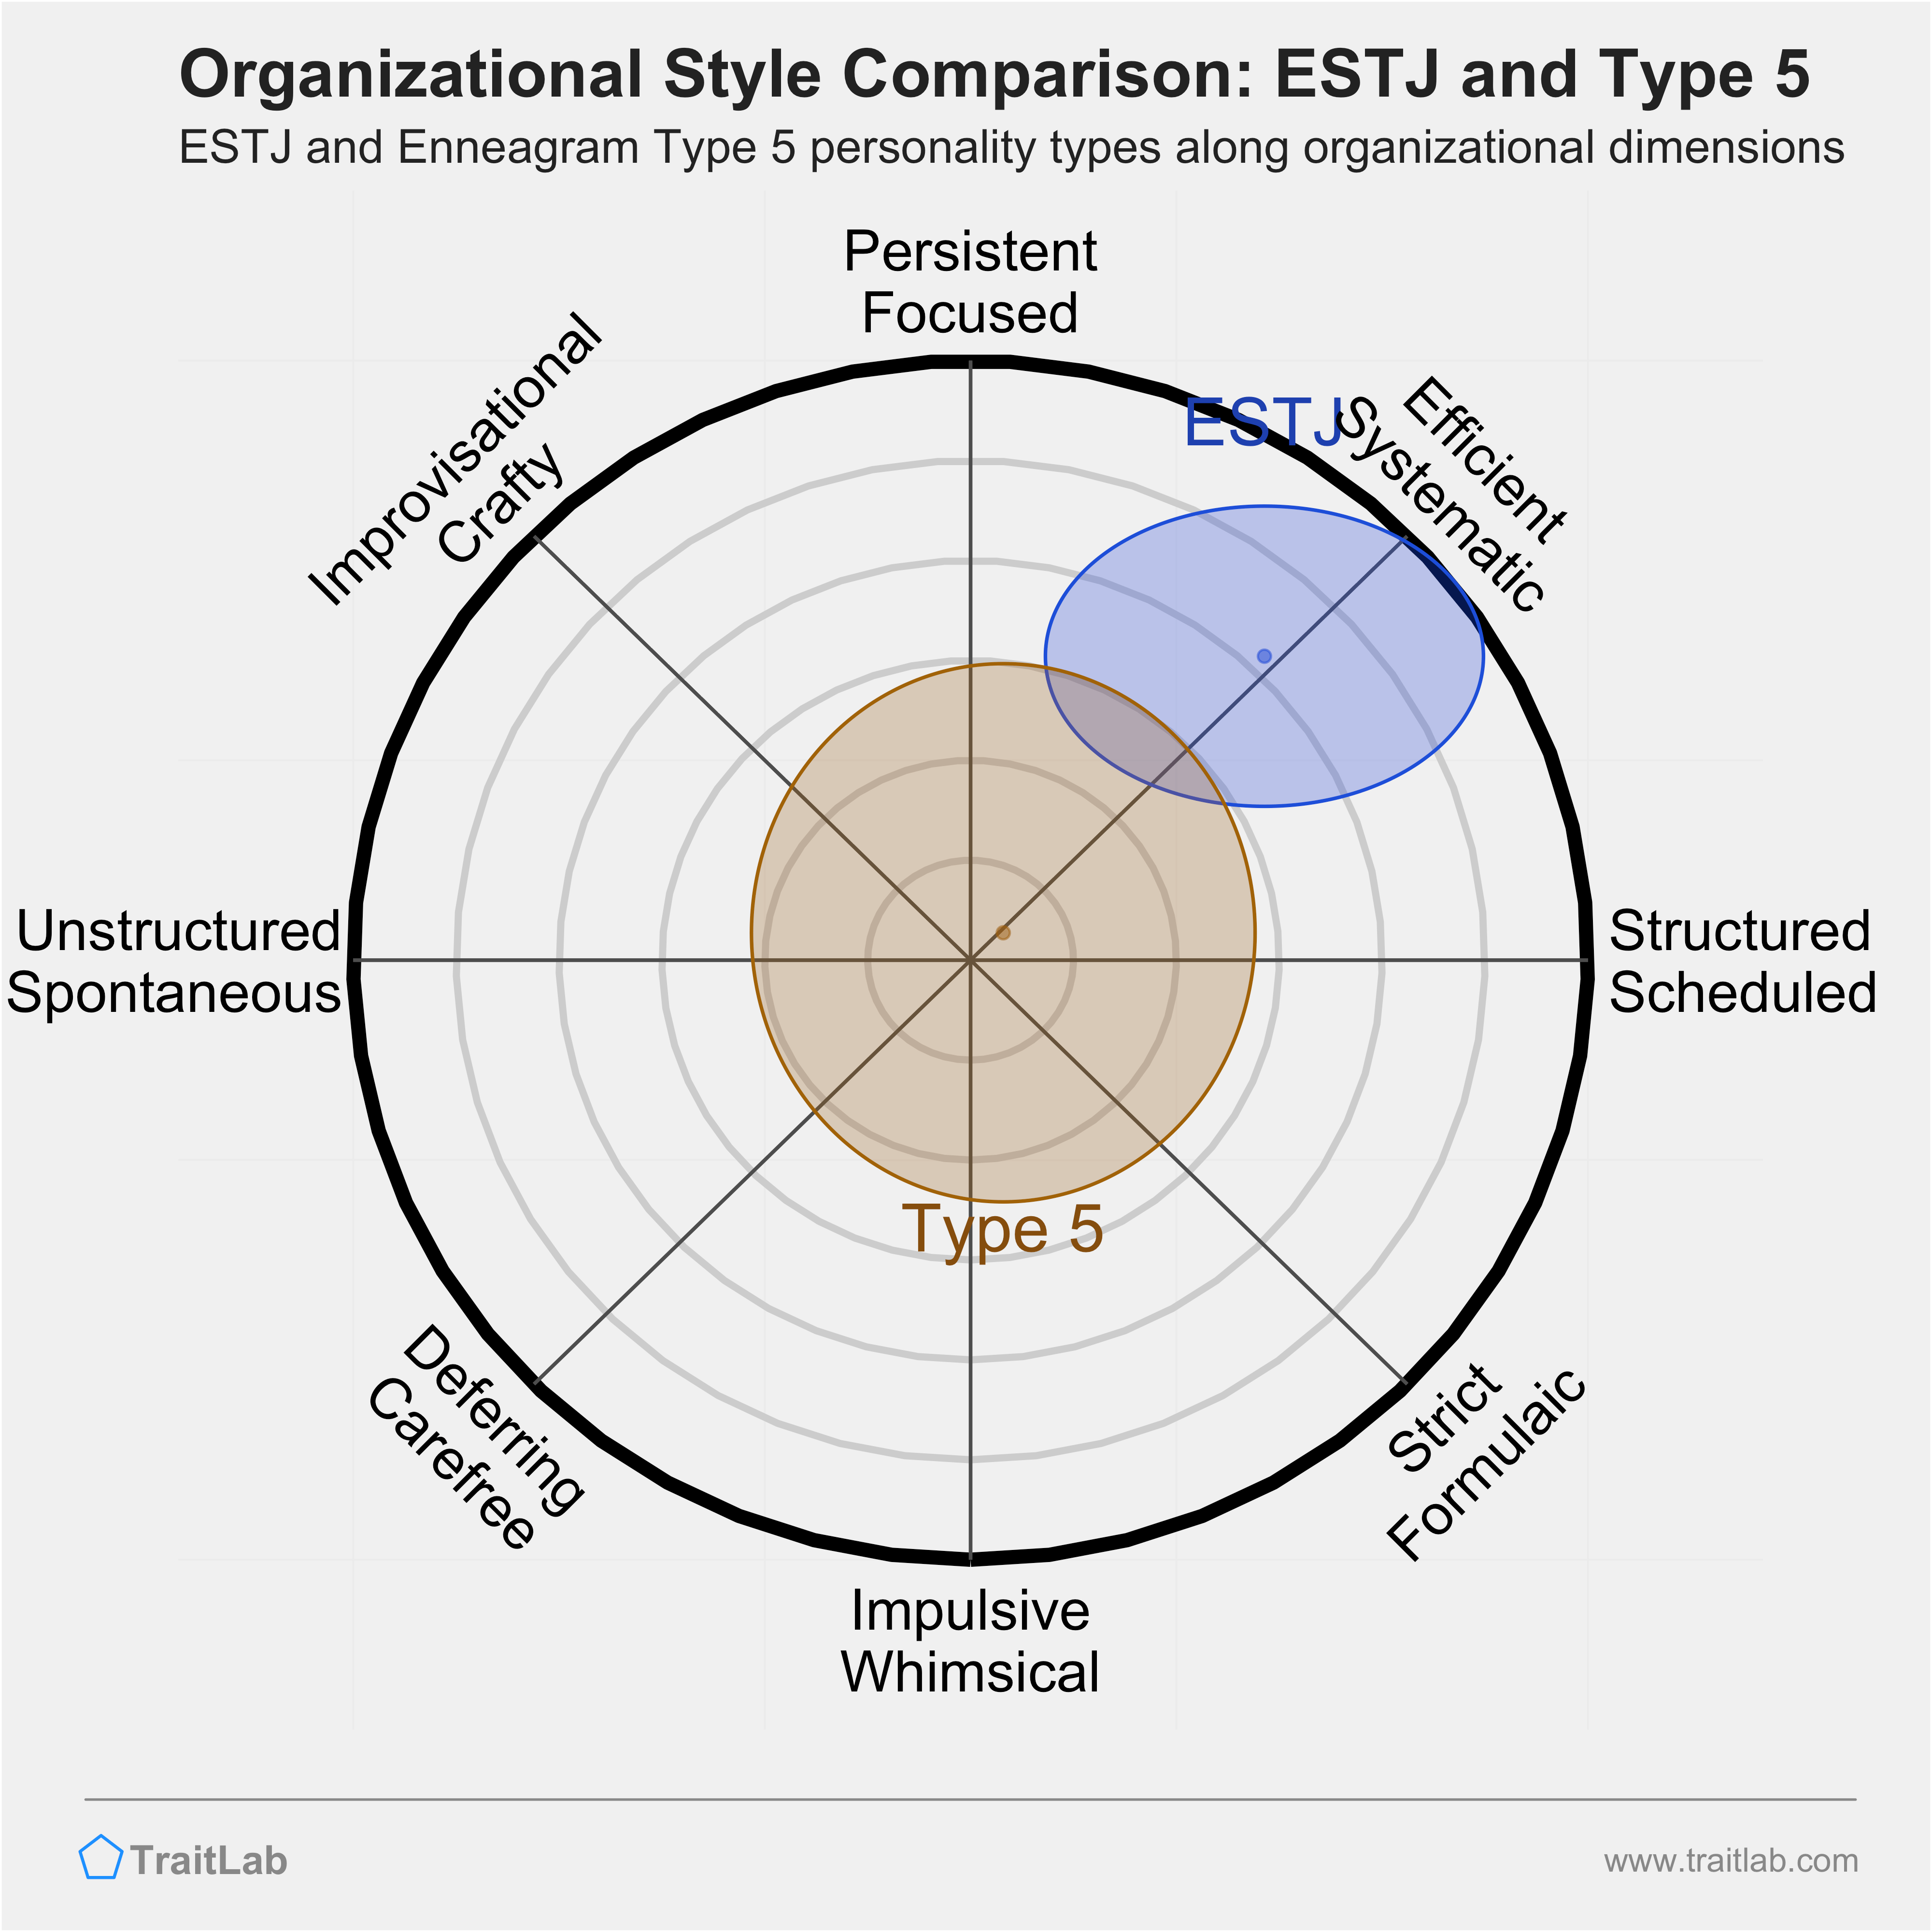 ESTJ and Type 5 comparison across organizational dimensions